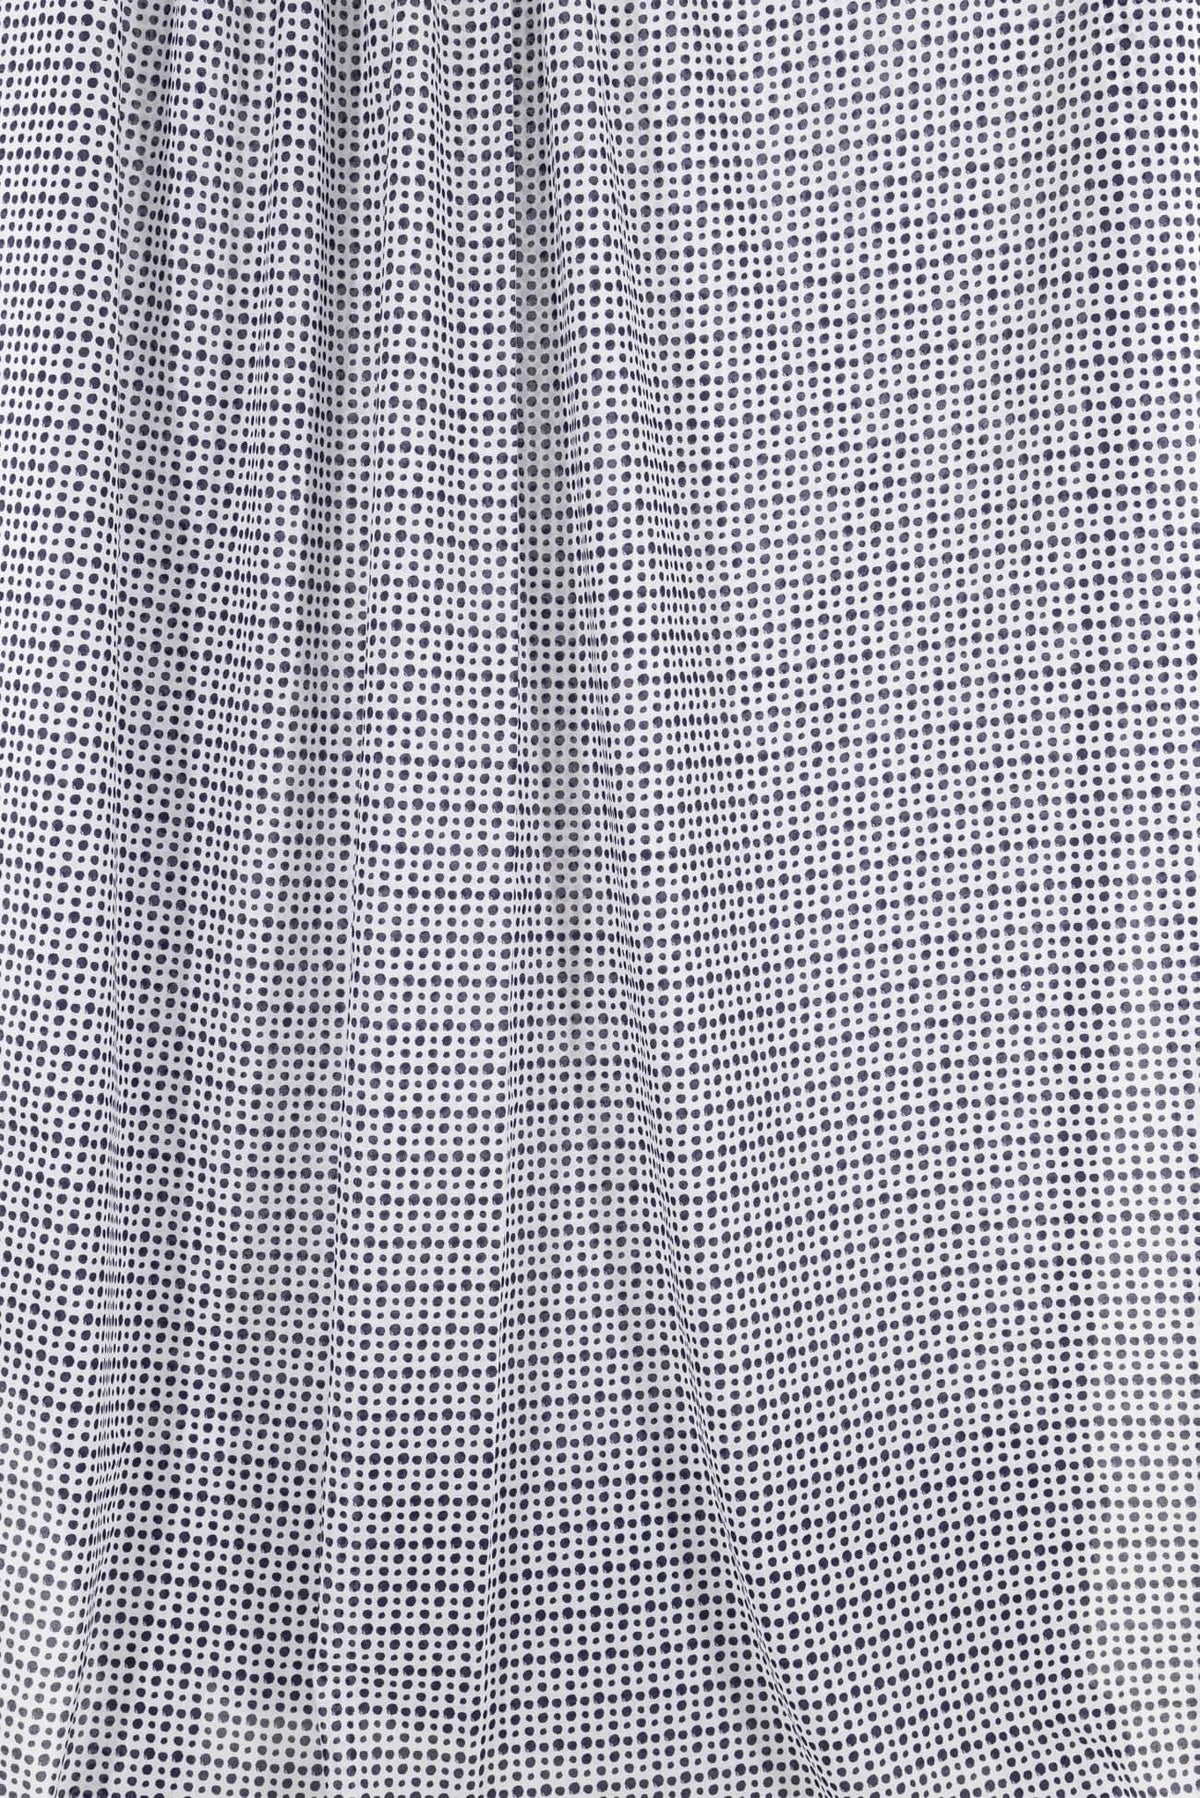 Quirky Blue Dots Cotton Lawn Woven - Marcy Tilton Fabrics